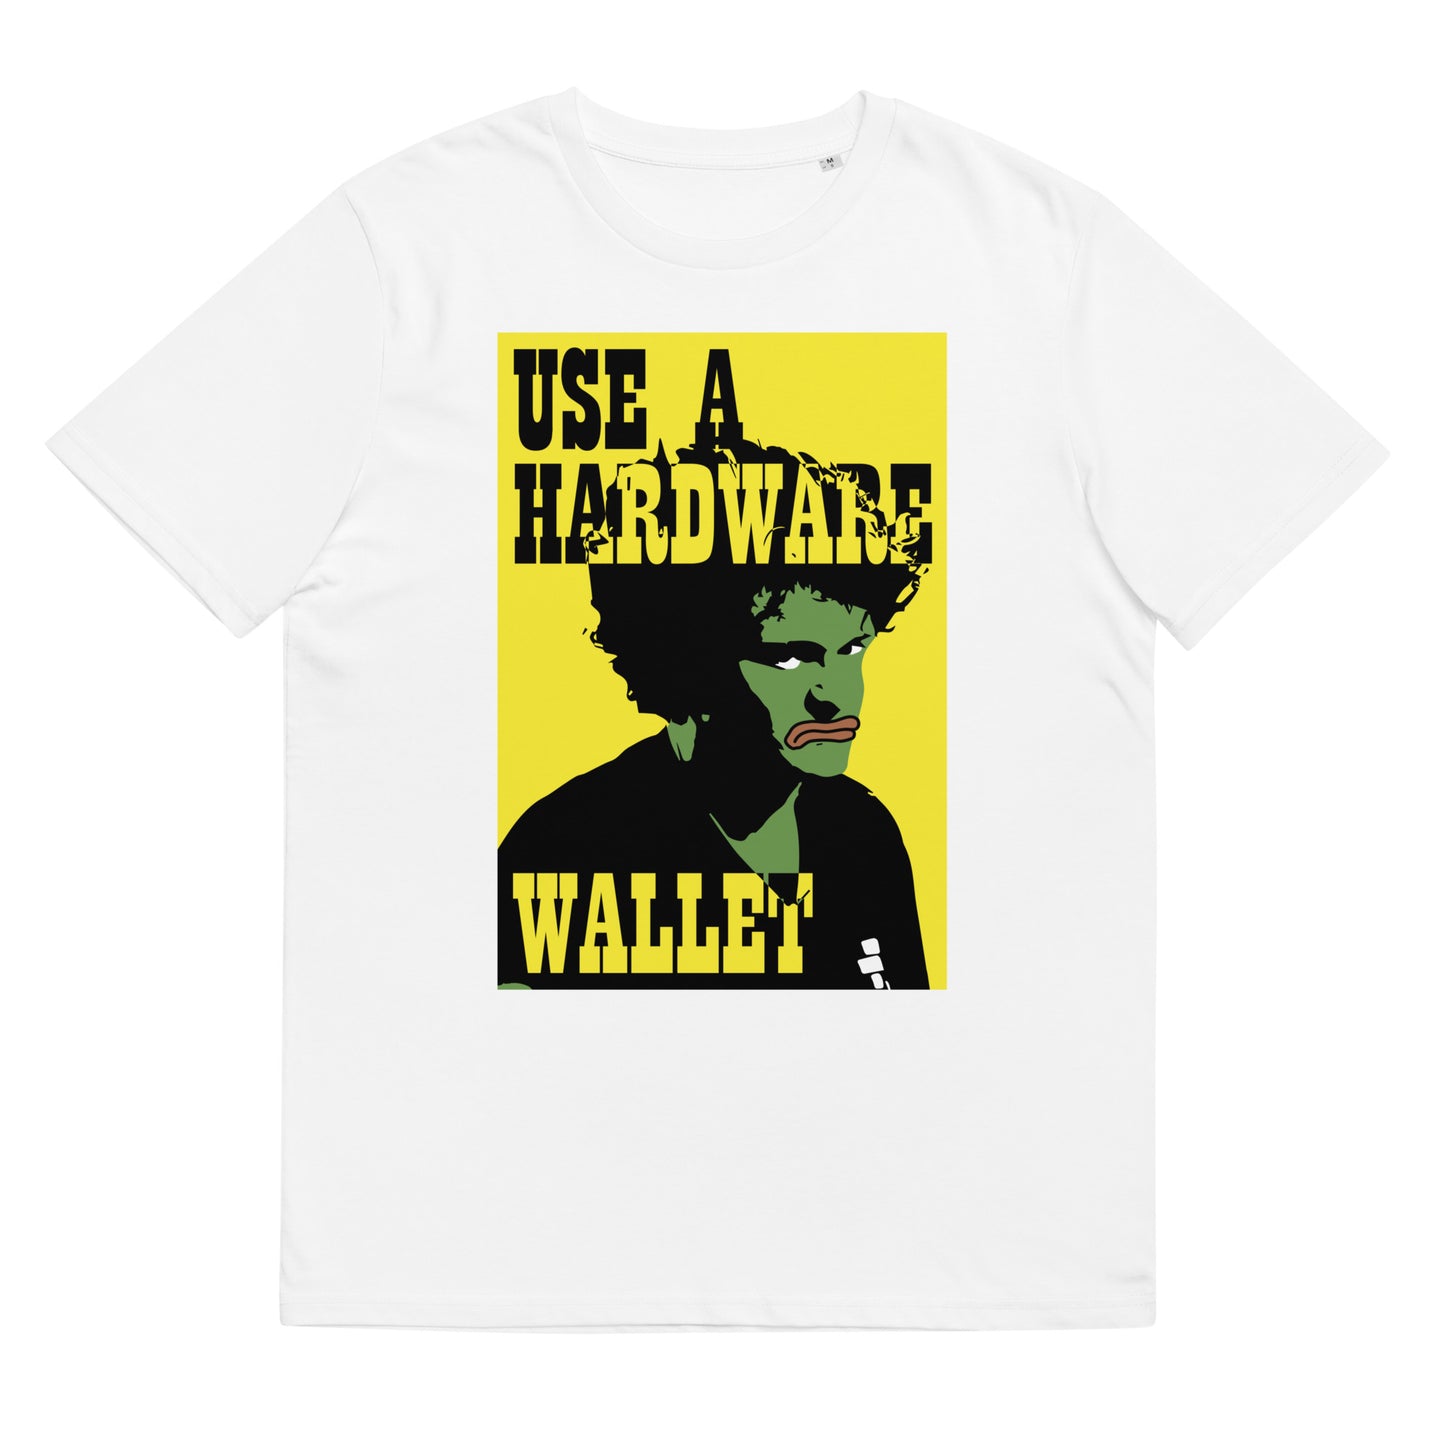 use-hardware-wallet-t-shirt-white